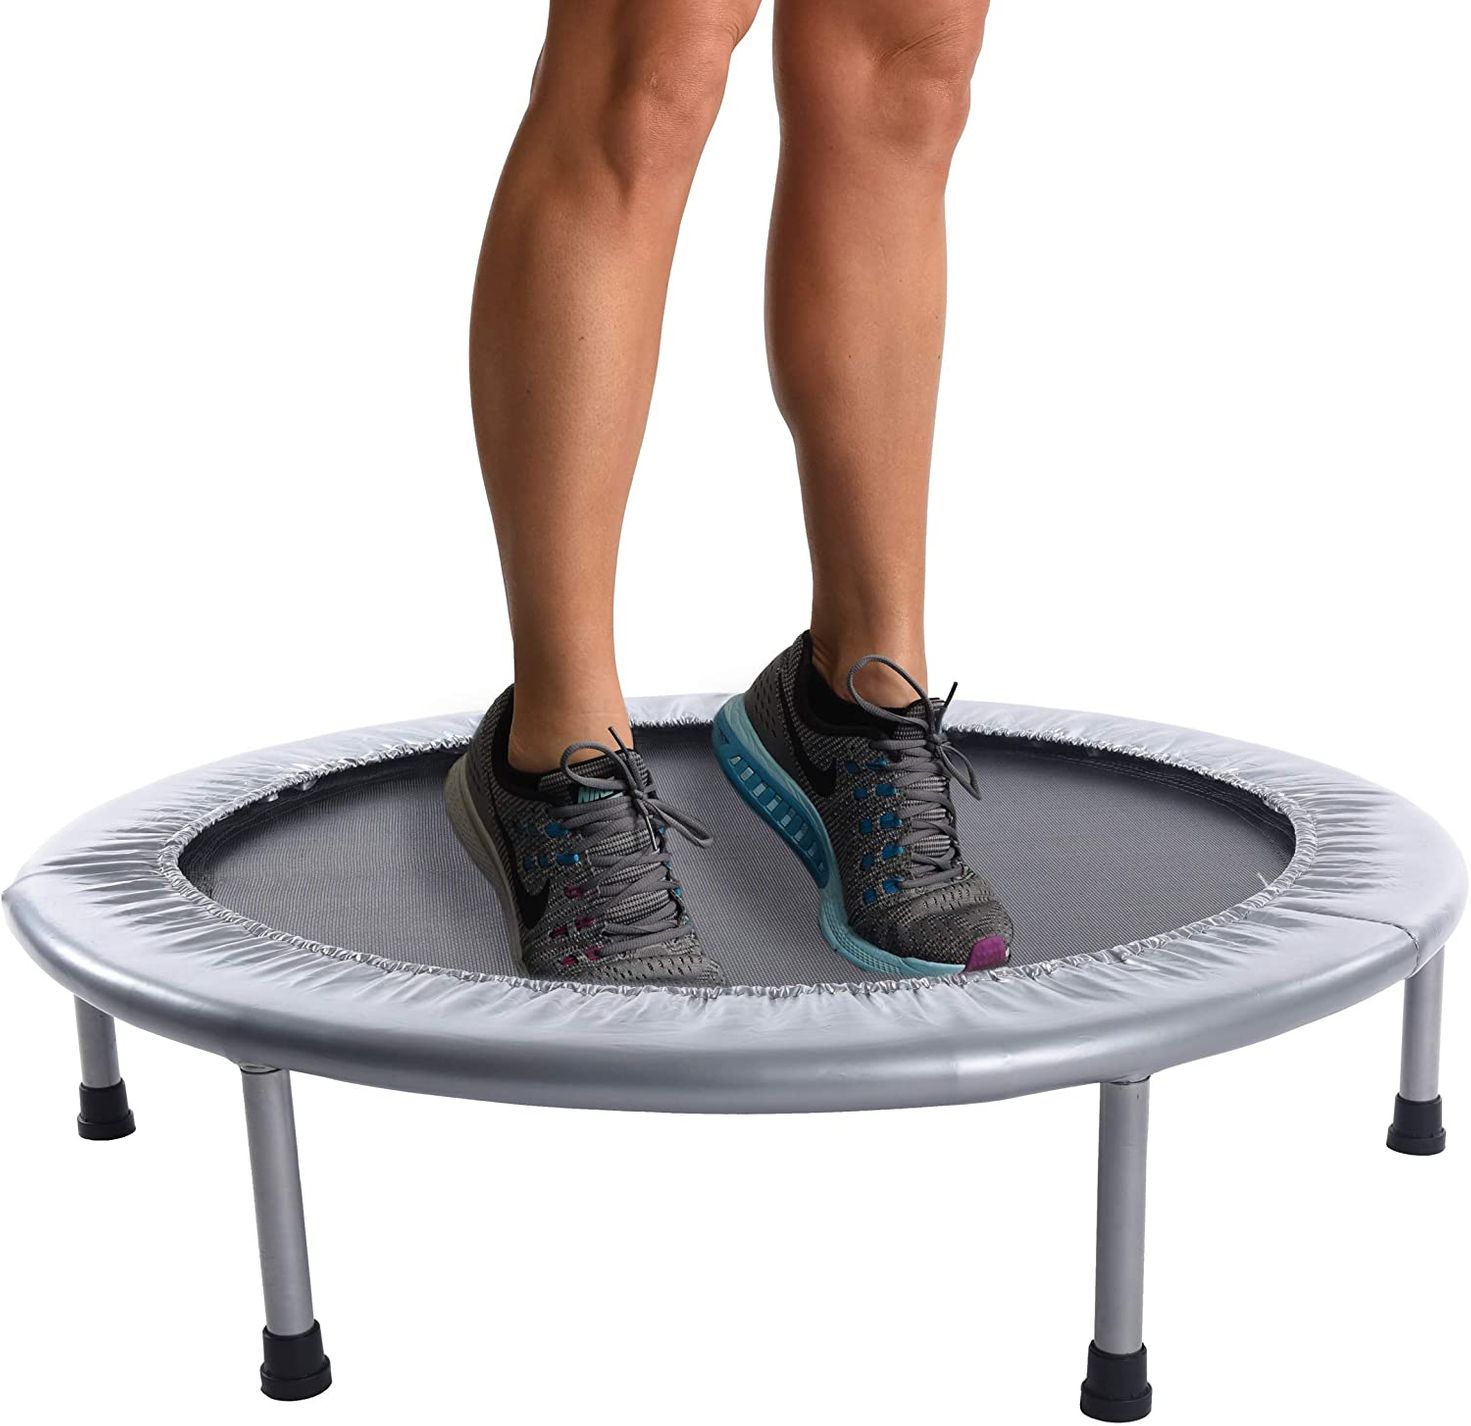 Doufit Adjustable Fitness Trampoline Rebounder Home Exercise Workout Gym Sport 